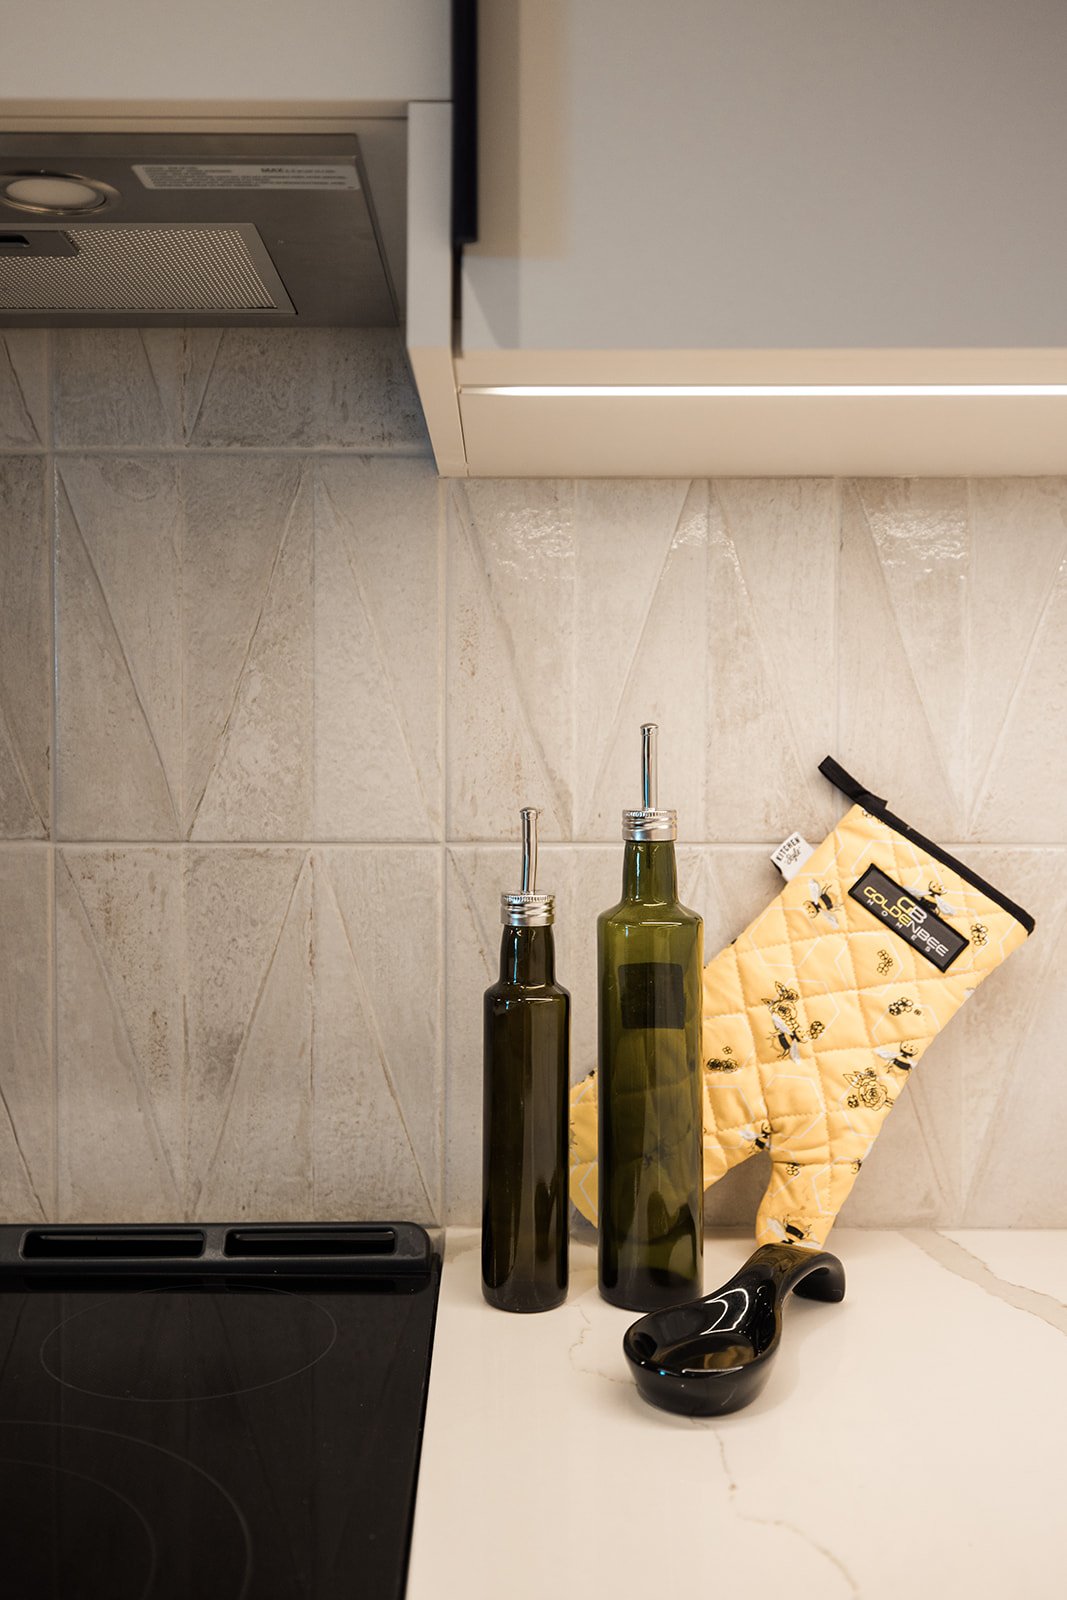 Detail of mosaic backsplash in GTA luxury condo kitchen renovation